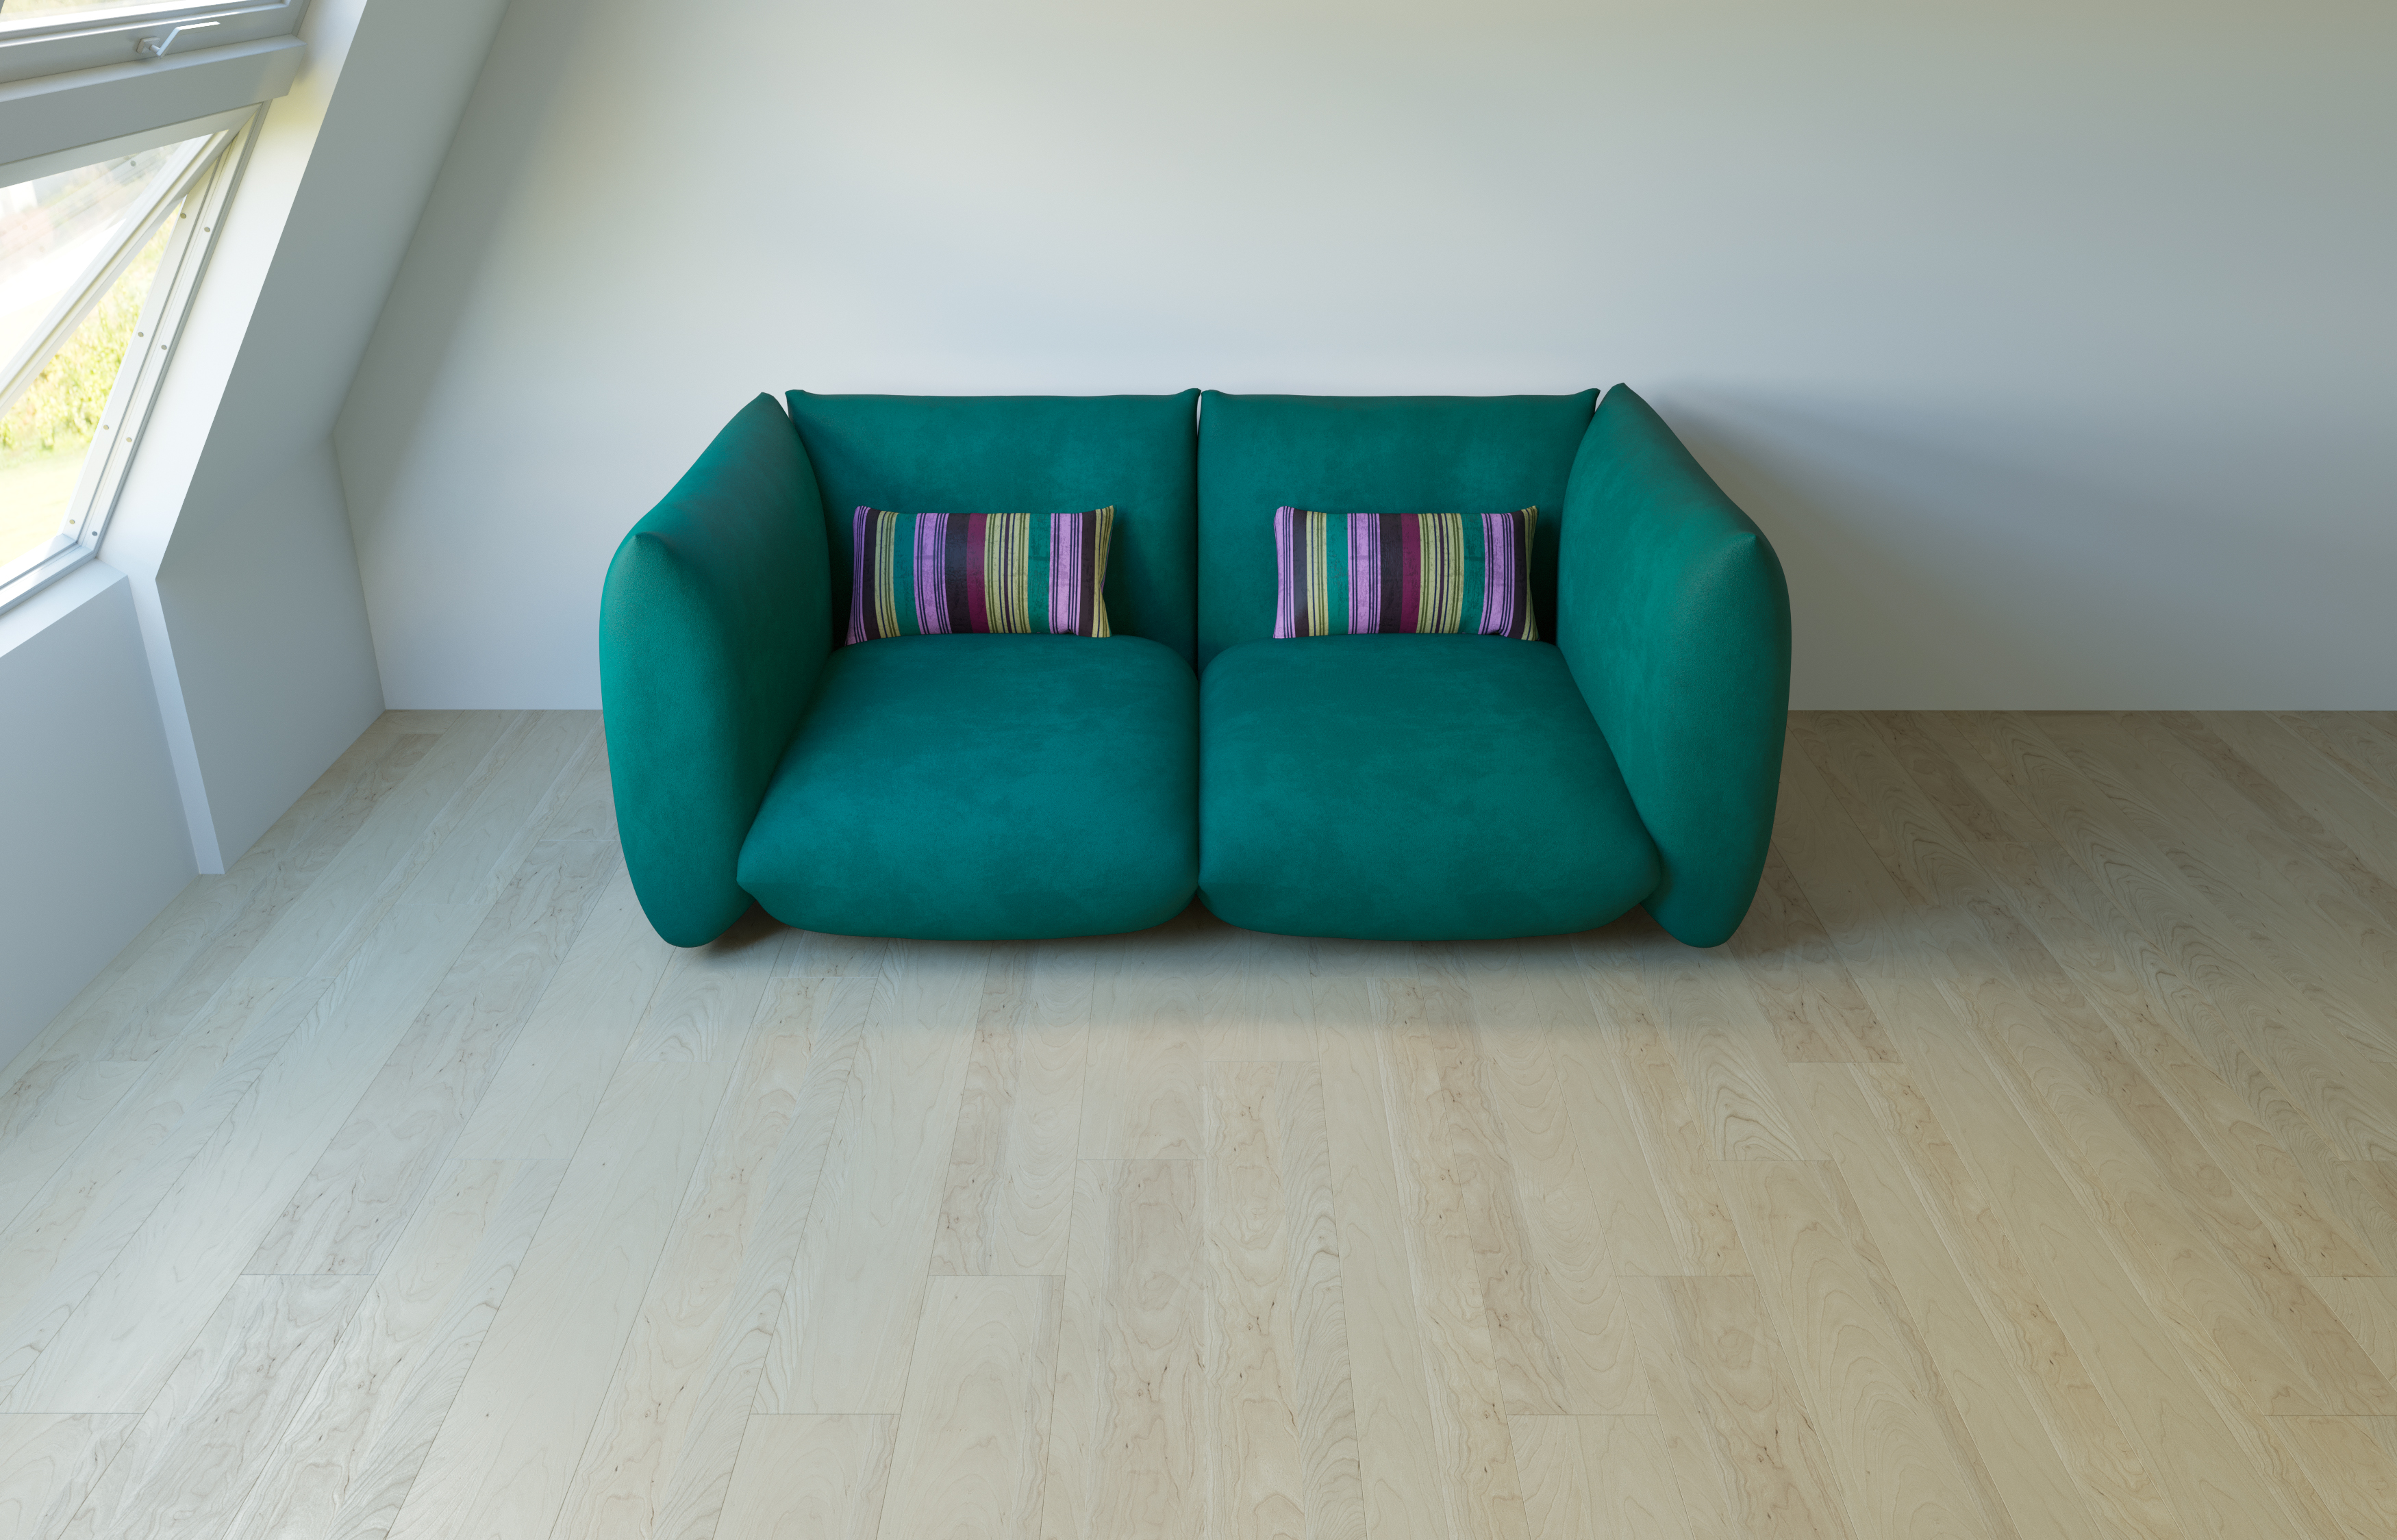 Lui Groenten Viool Basso v2: Corner Modular Sofa Low Profile design - Expand Furniture -  Folding Tables, Smarter Wall Beds, Space Savers